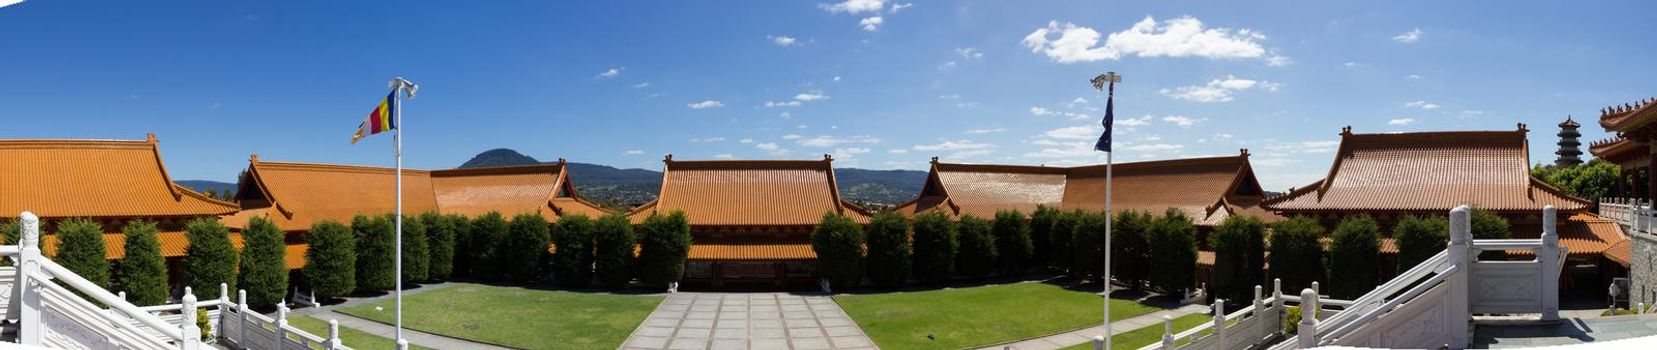 Panorama of Nan Tien Temple Buddha religion in Australia